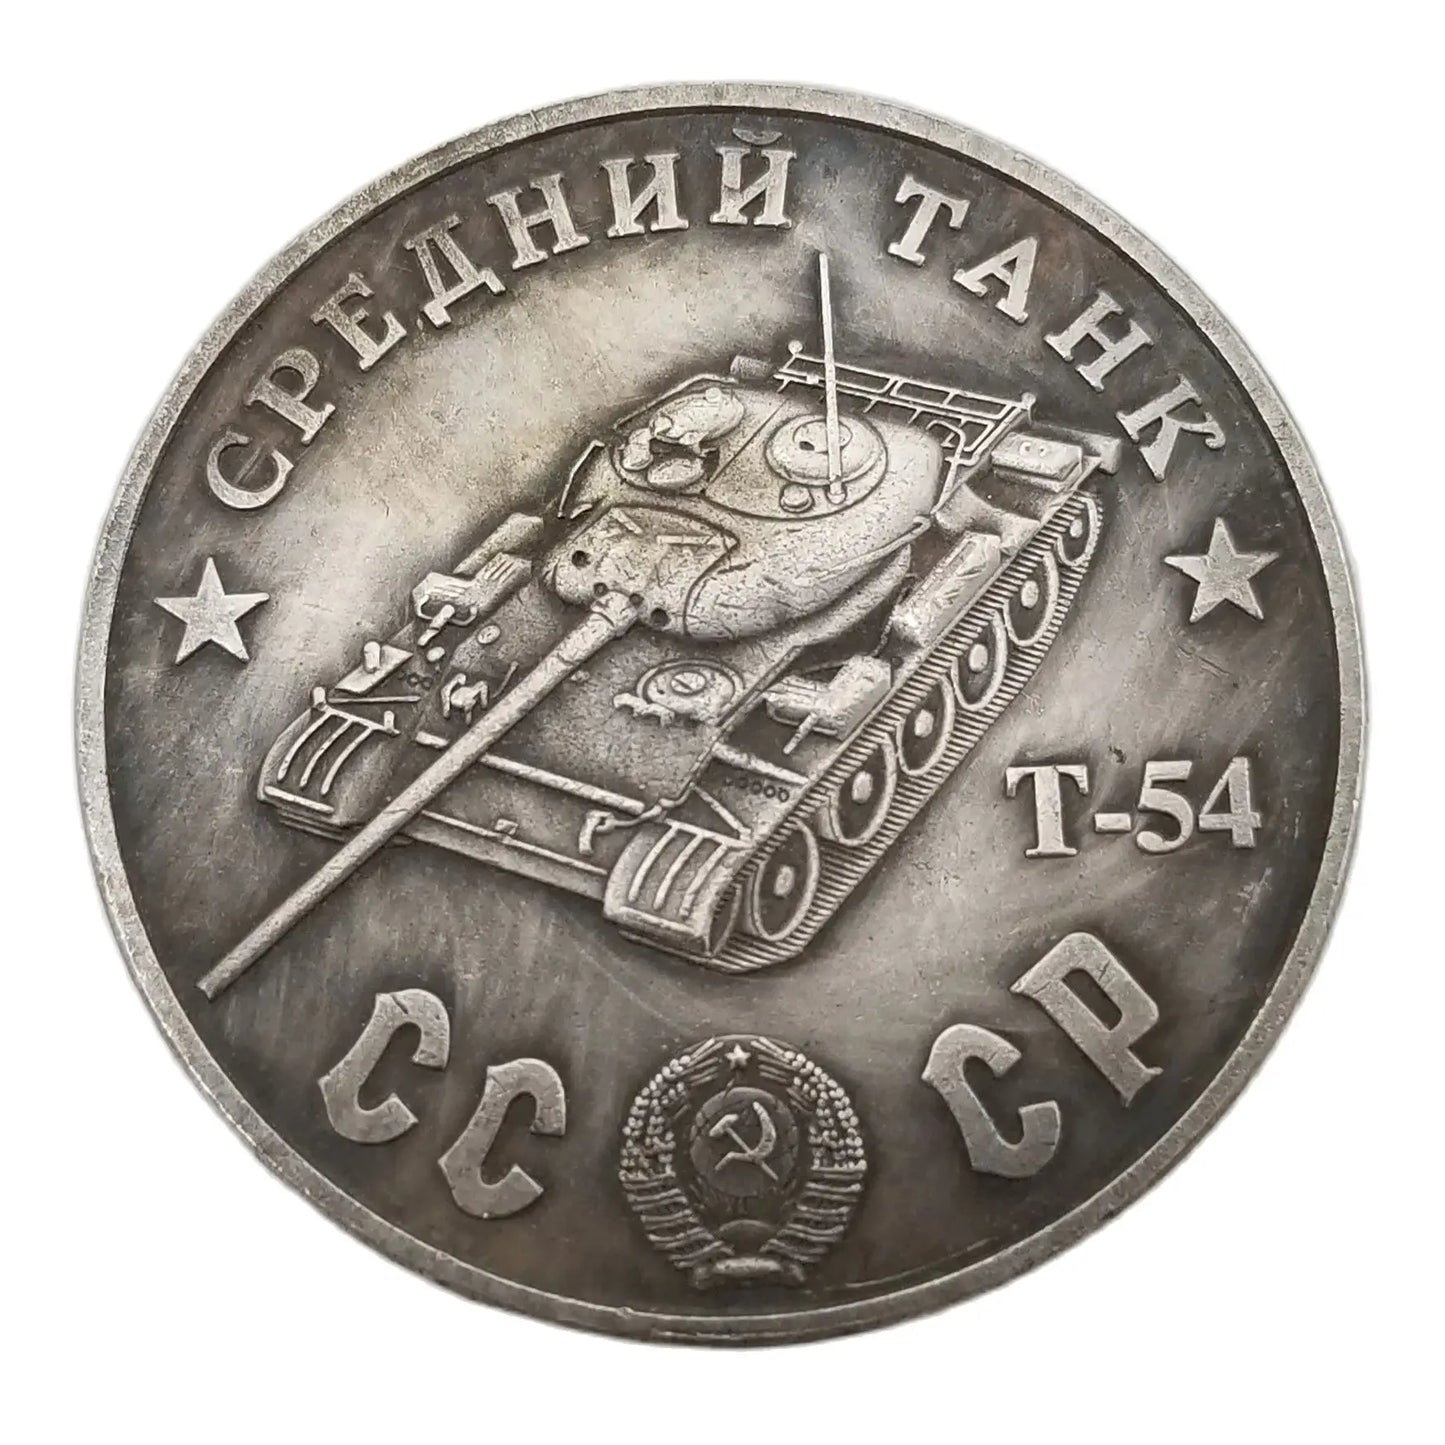 Ancient Soviet CCCP Tank Coin - Military War Commemorative Coin"